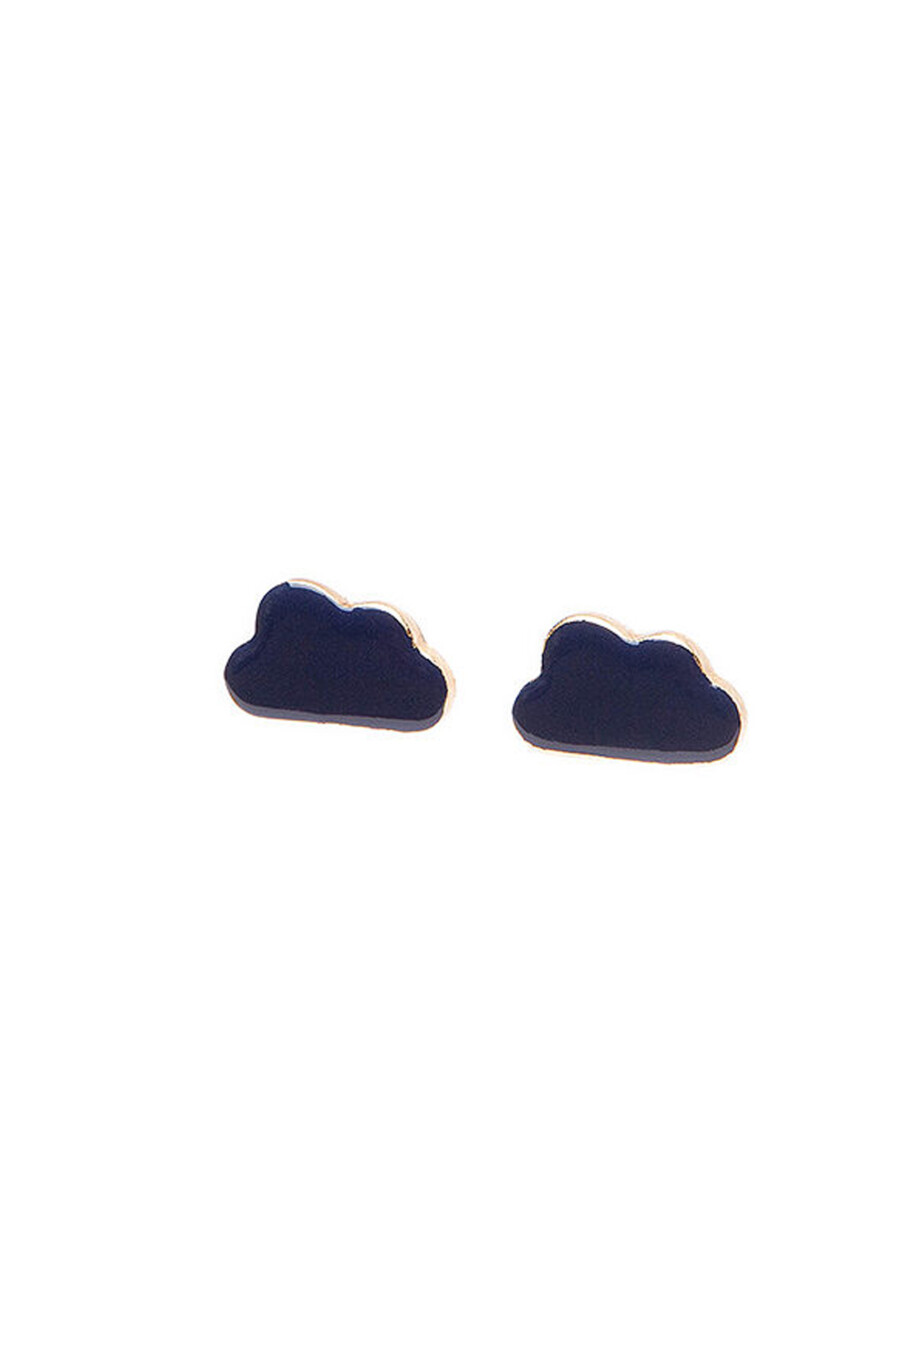 ABE Earrings CLOUD WITH GOLD EGE | Dark marine blue